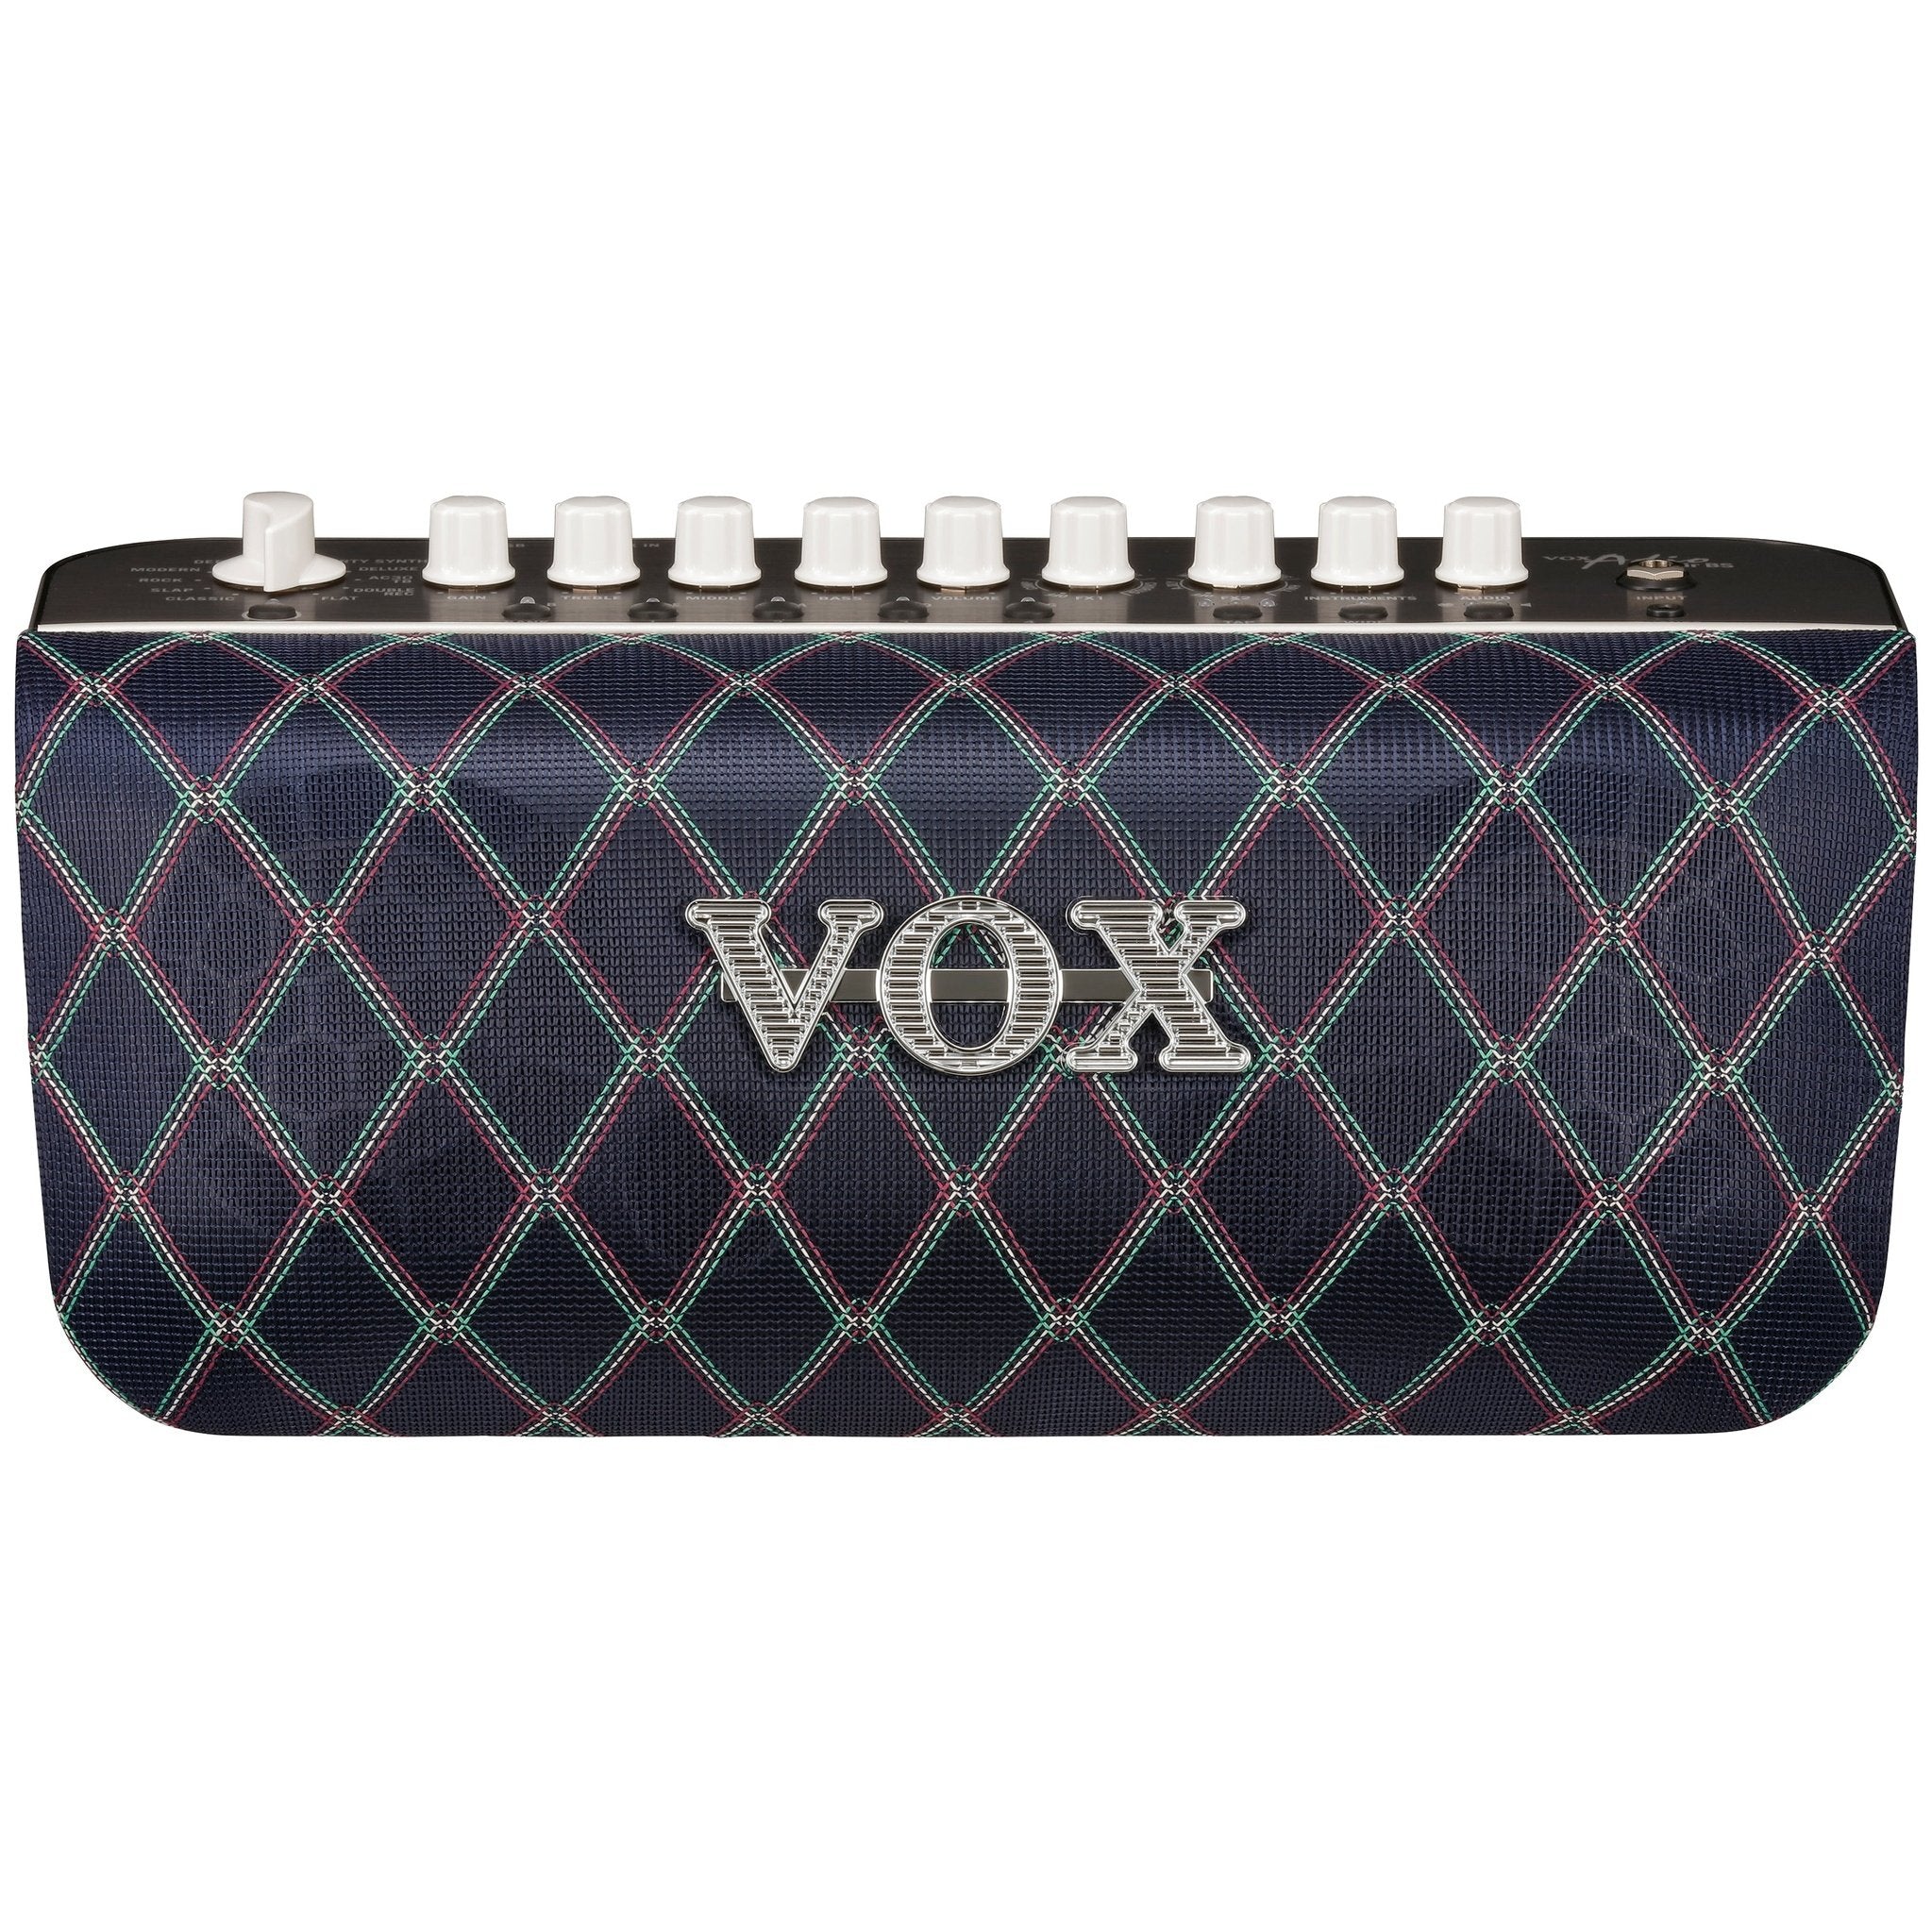 Vox Adio Air Bass Guitar Amp w/Bluetooth 1